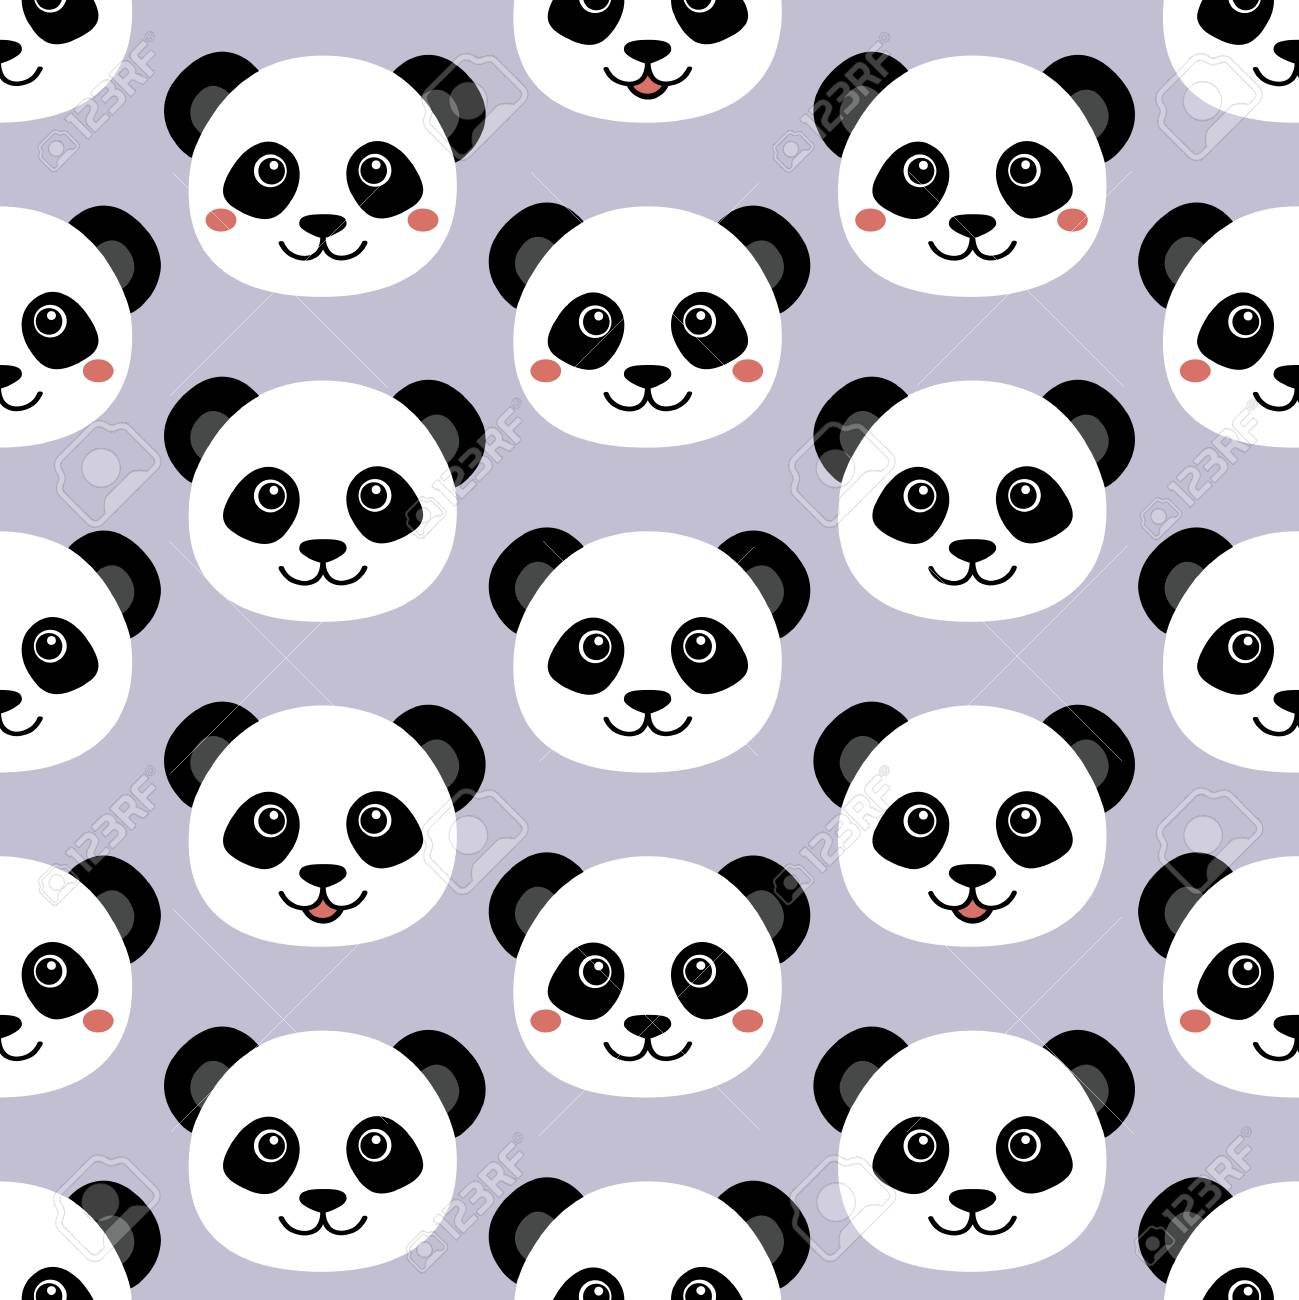 Free download Cute Panda Face Seamless Cartoon Wallpaper Royalty Clipart [1299x1300] for your Desktop, Mobile & Tablet. Explore Cute Pandas Wallpaper. Cute Pandas Wallpaper, Cute Pandas Wallpaper, Cute Wallpaper of Pandas